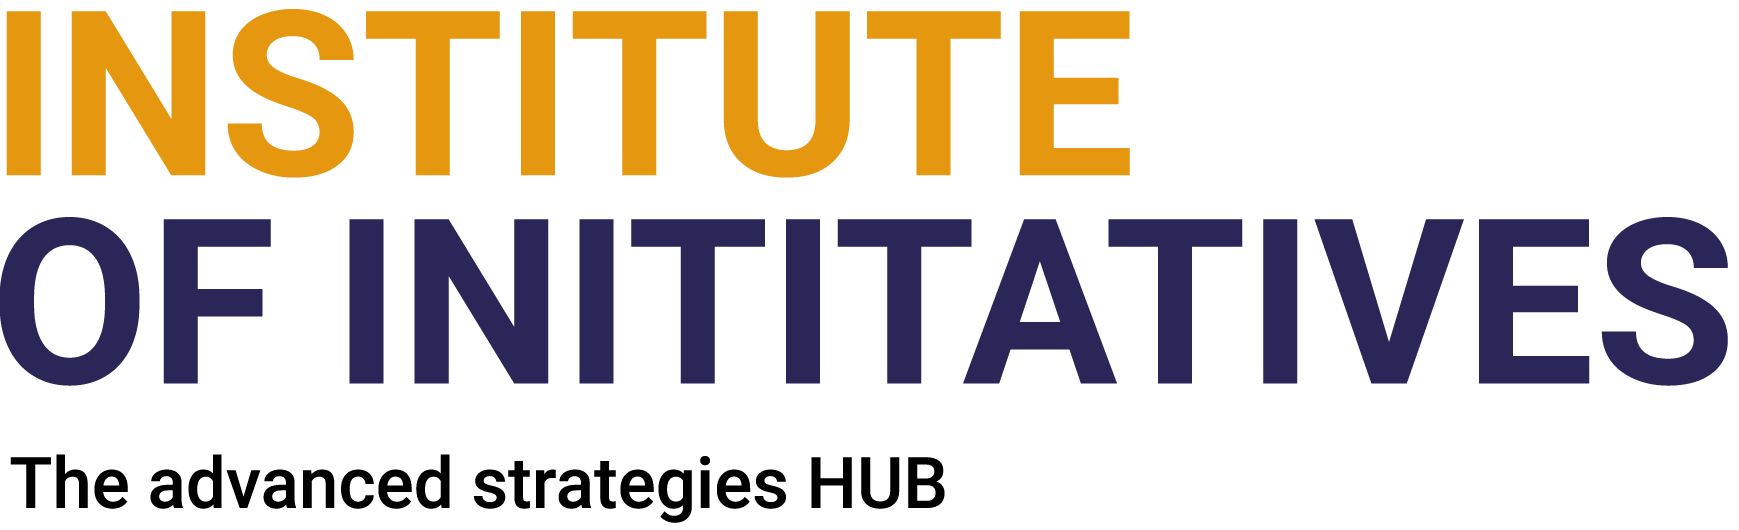 initiative_logo_en_3